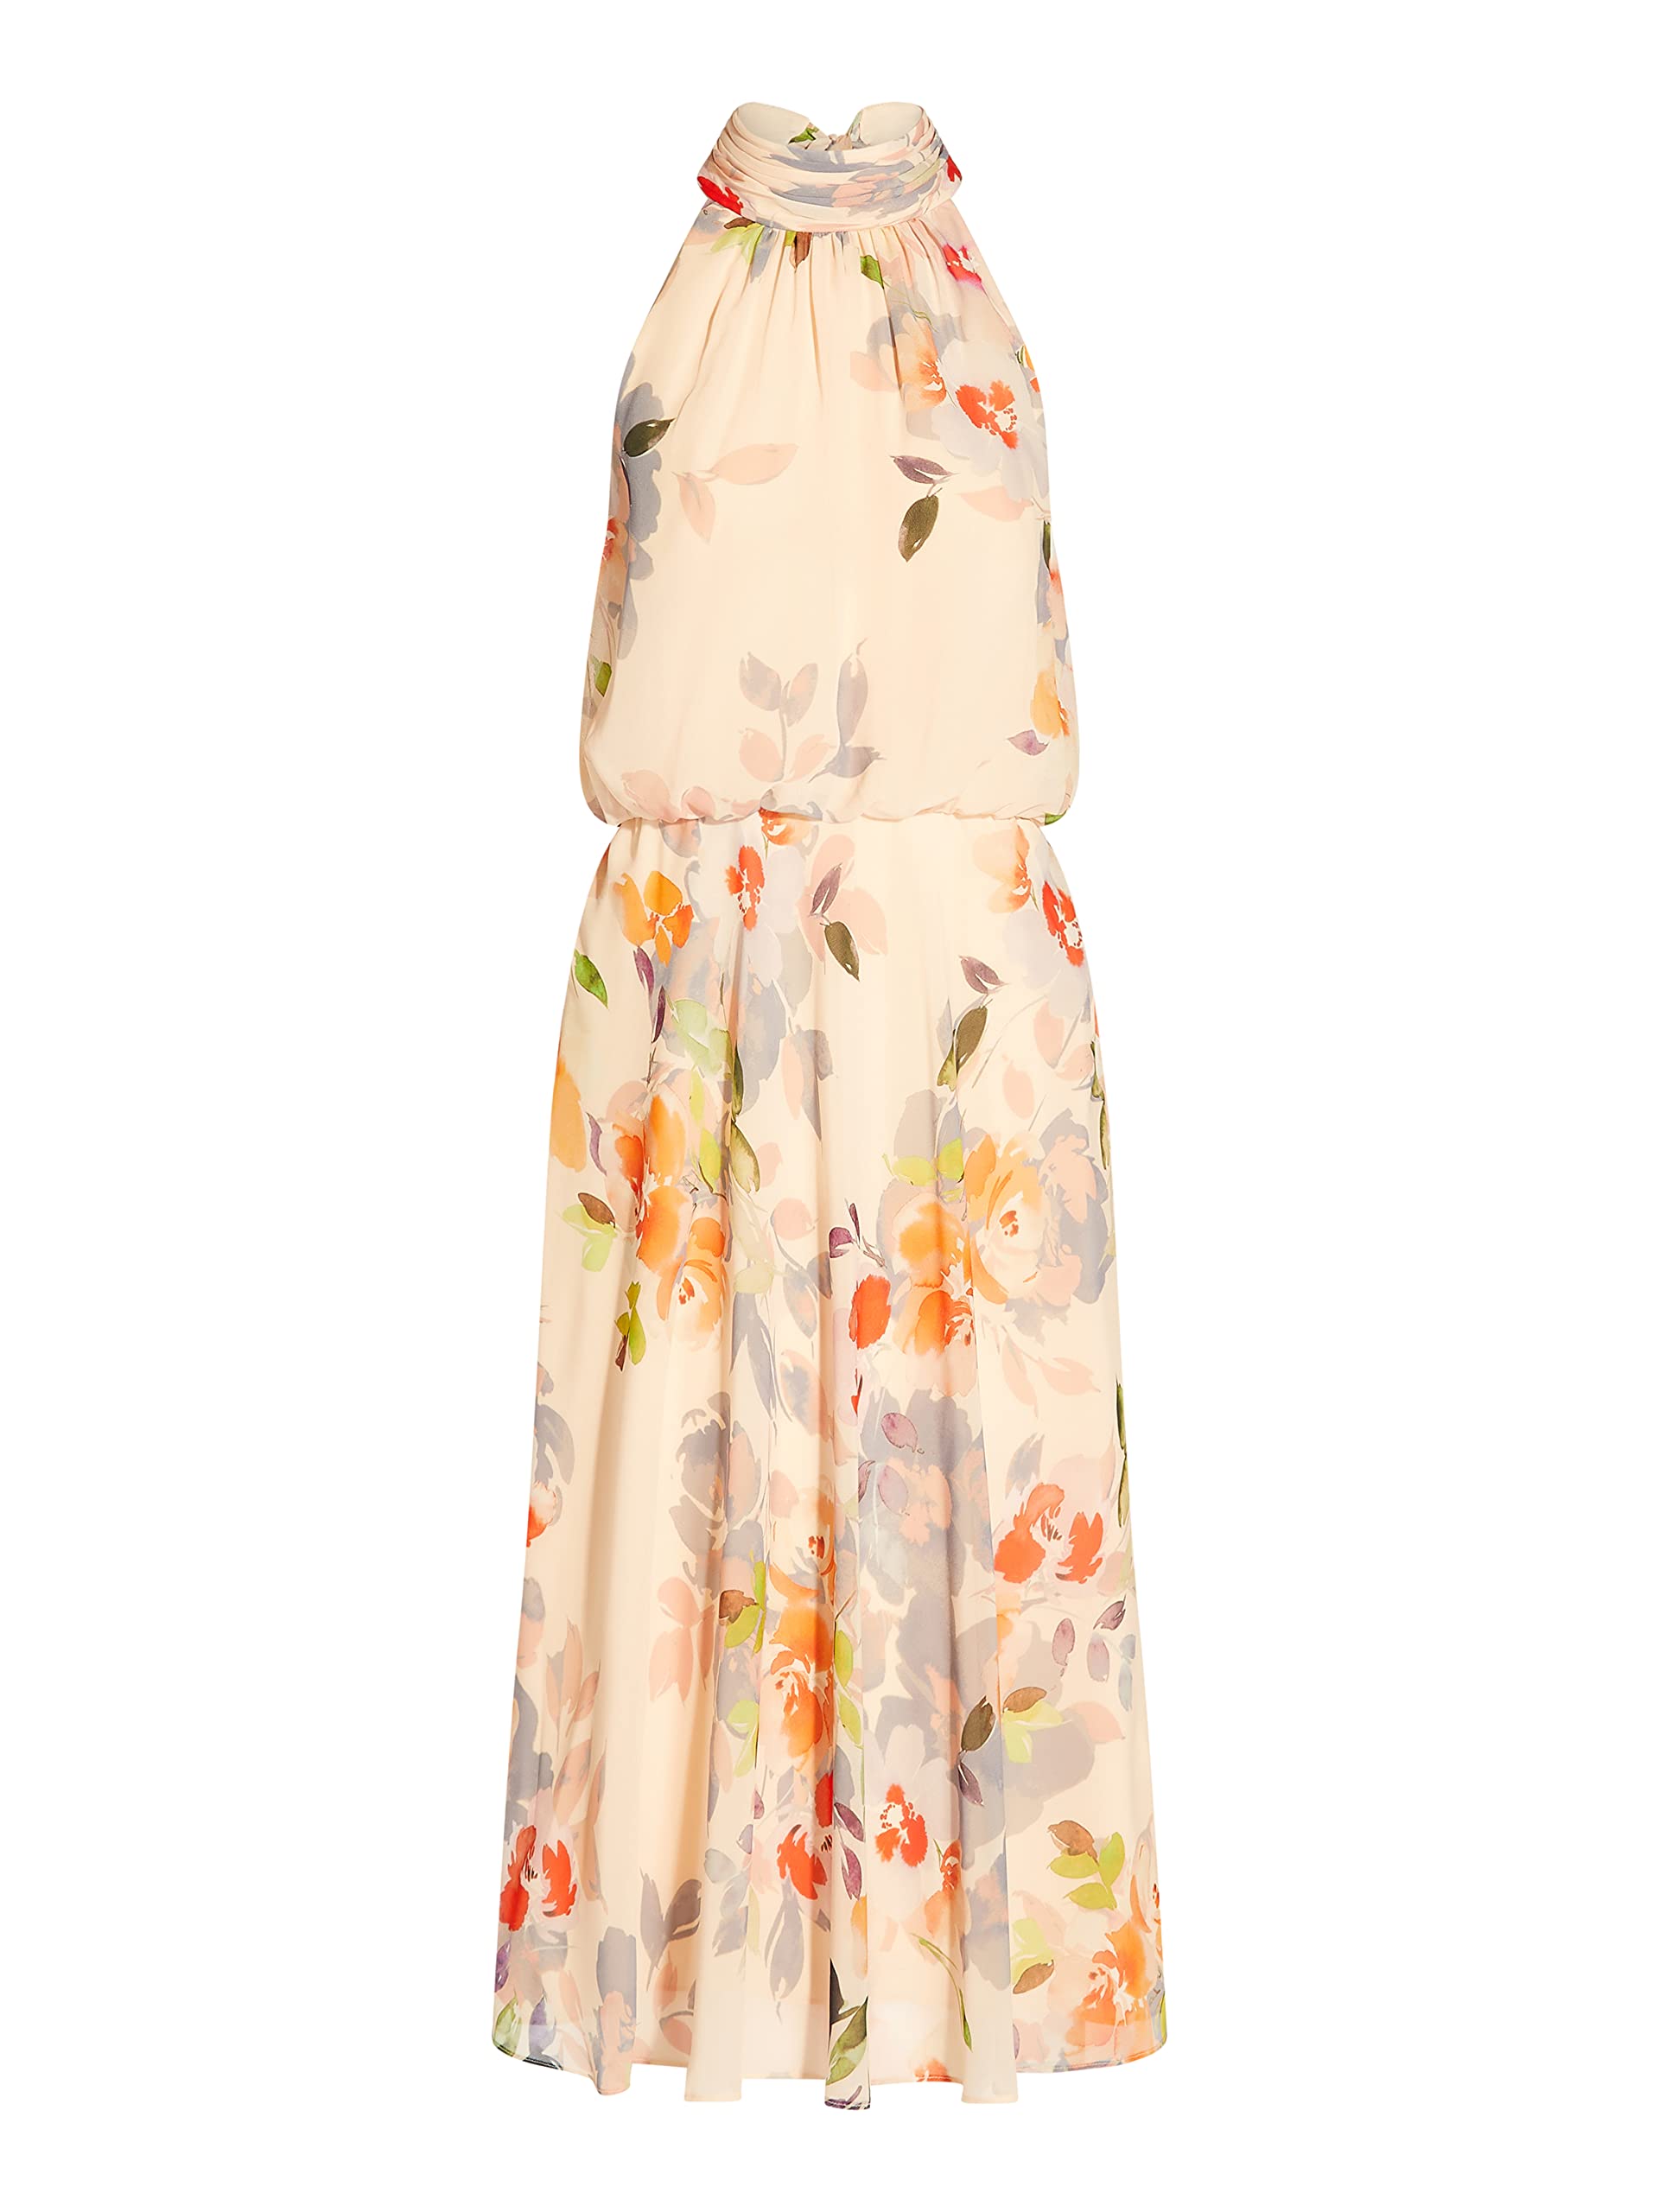 Adrianna Papell Women's Floral Halter Chiffon Dress